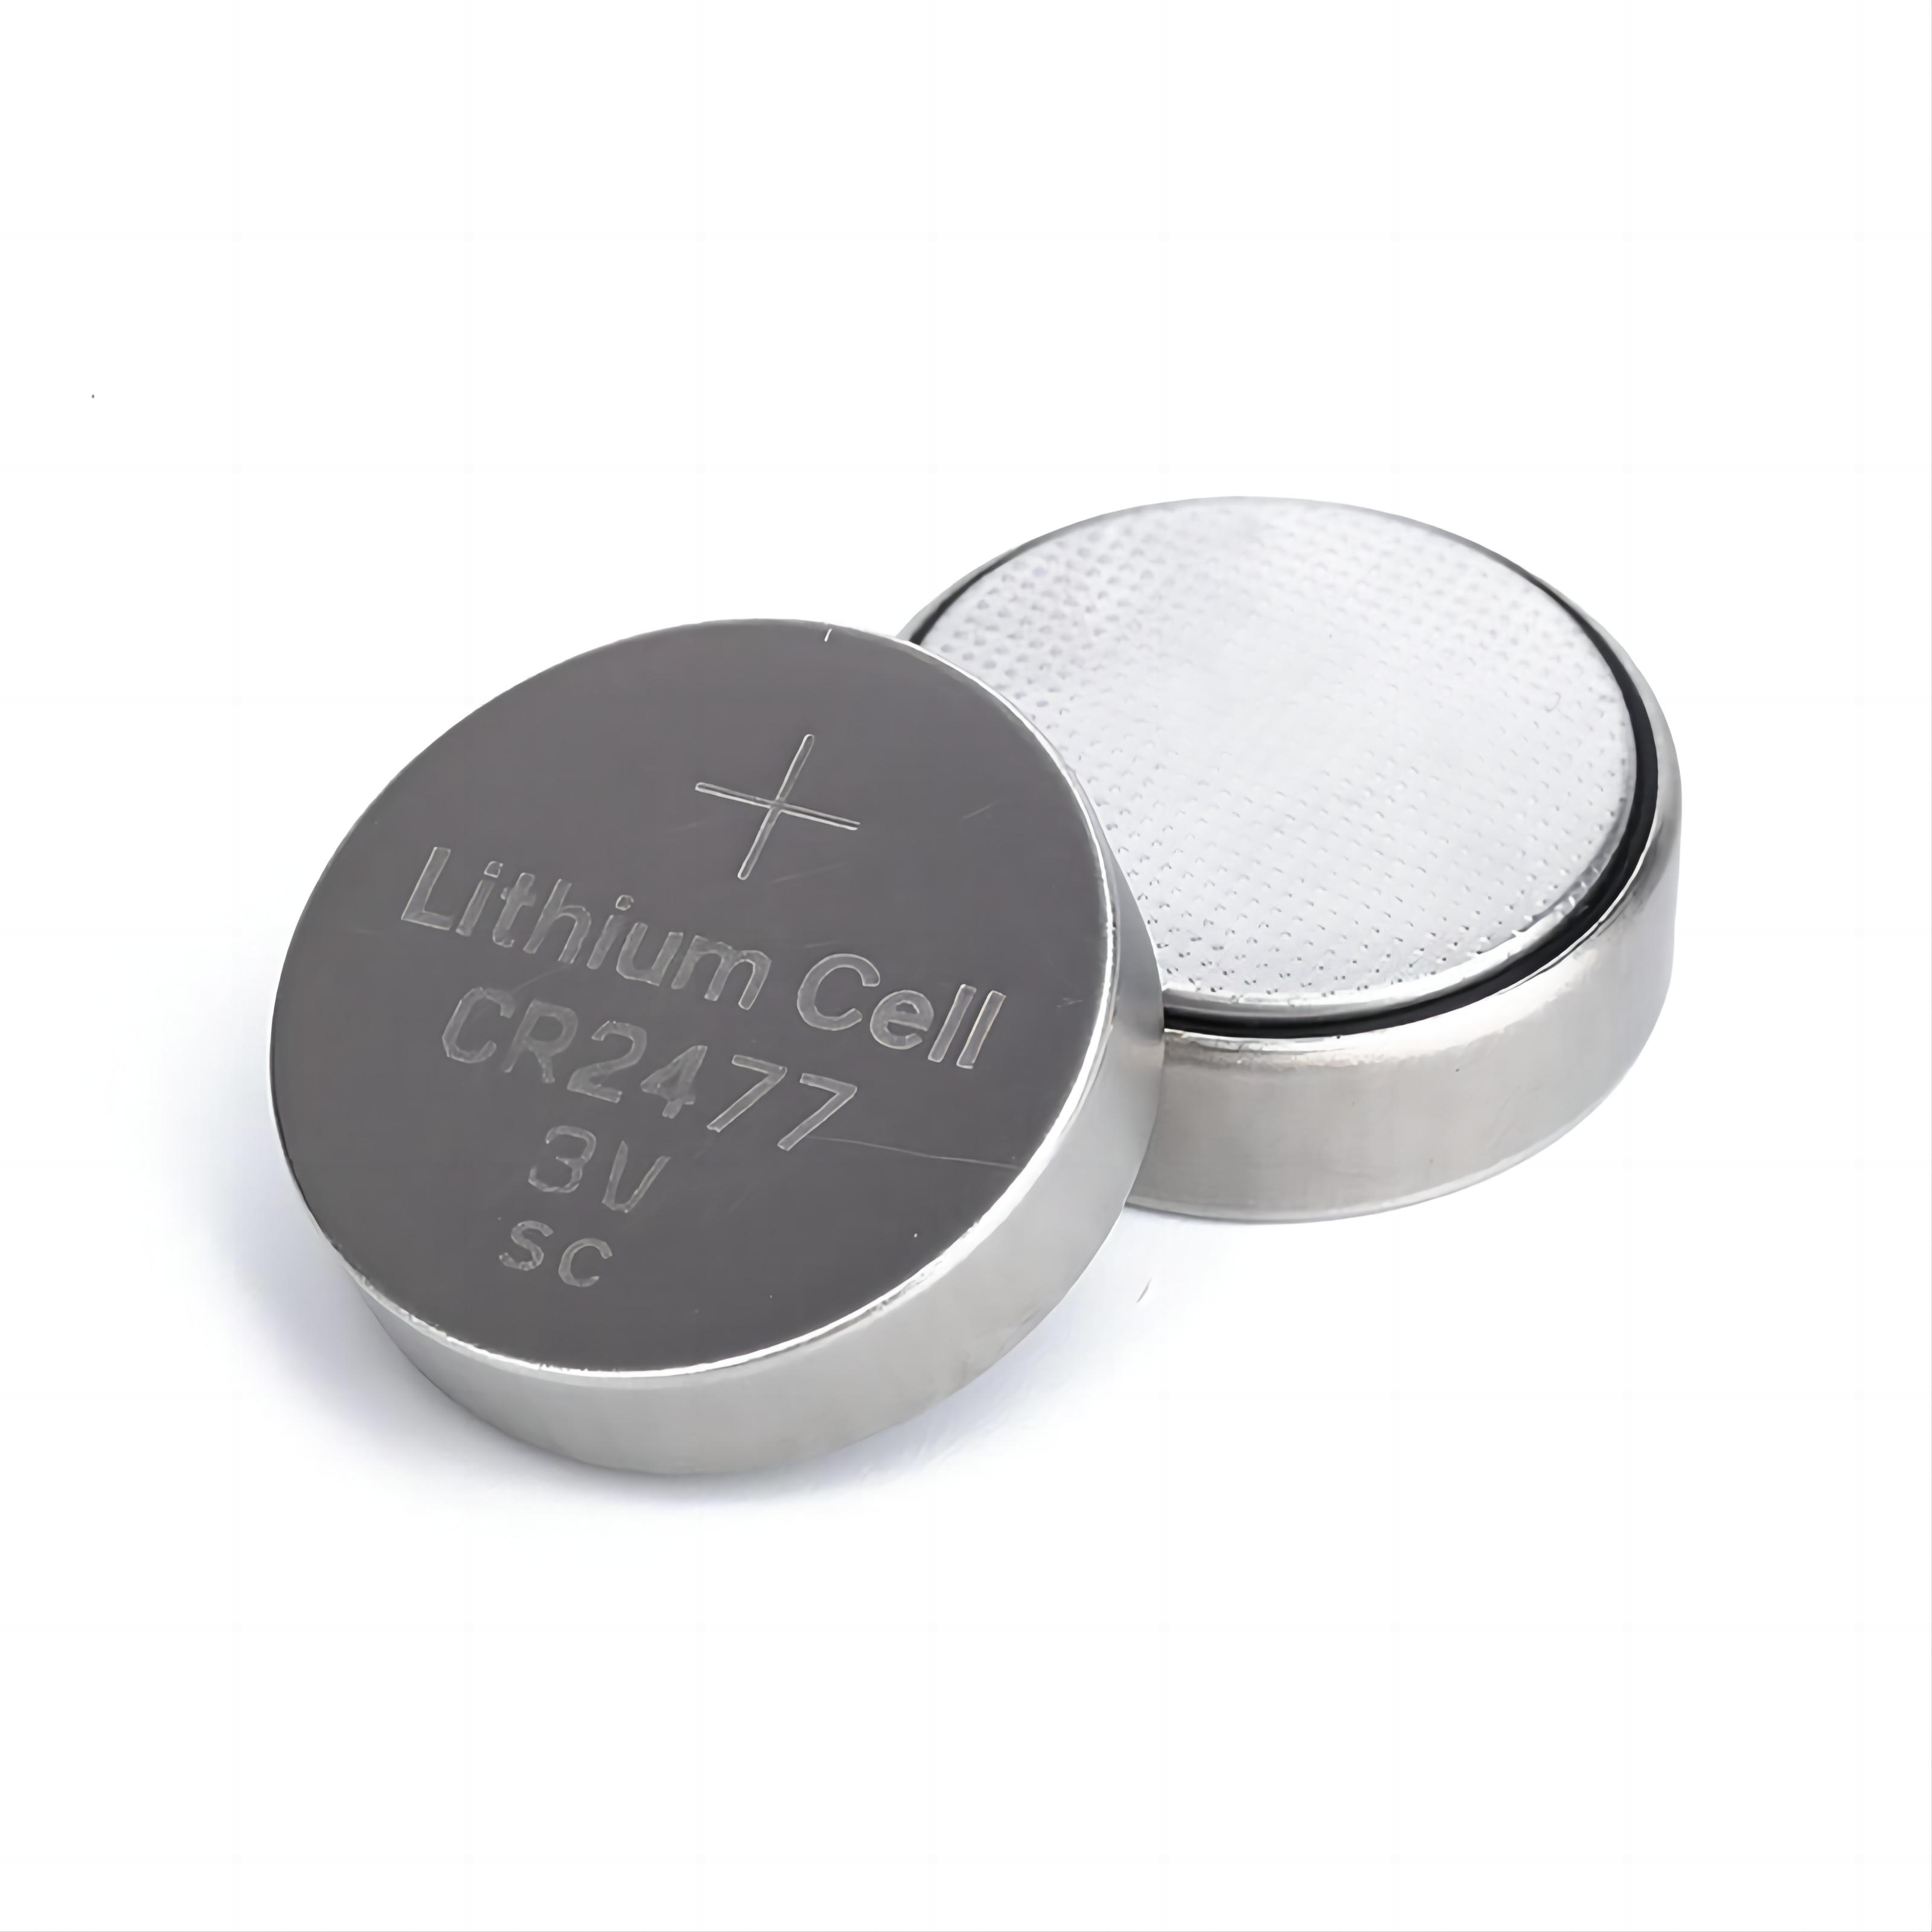 CR2477 Lithium npib Cell |Weijiang zog